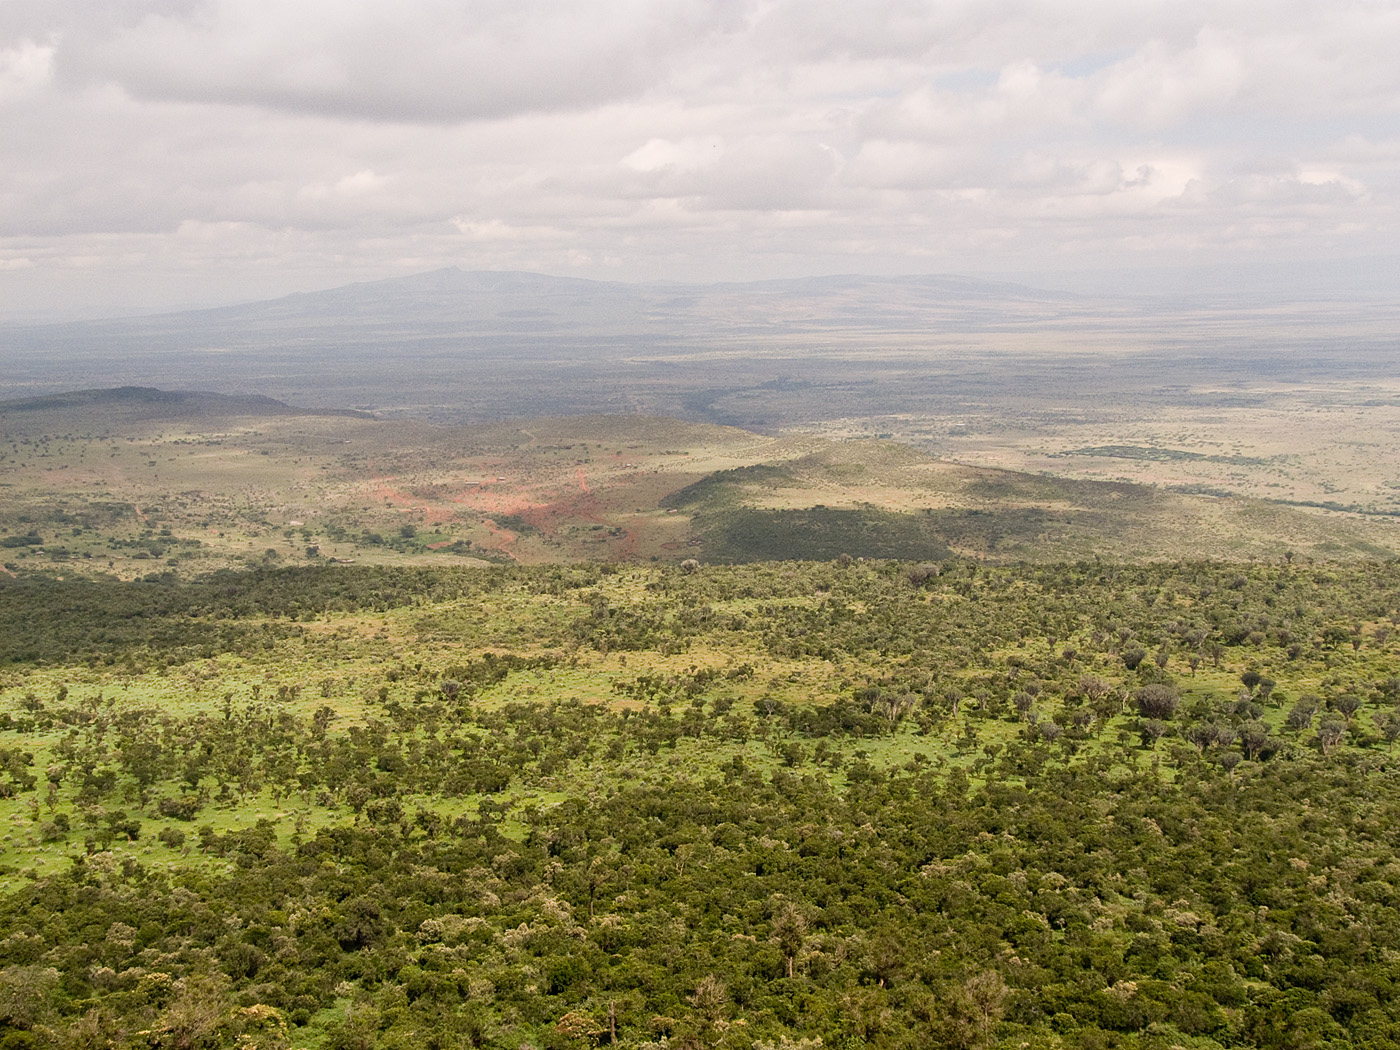 Rift Valley from viewpoint near Maai Mahiu